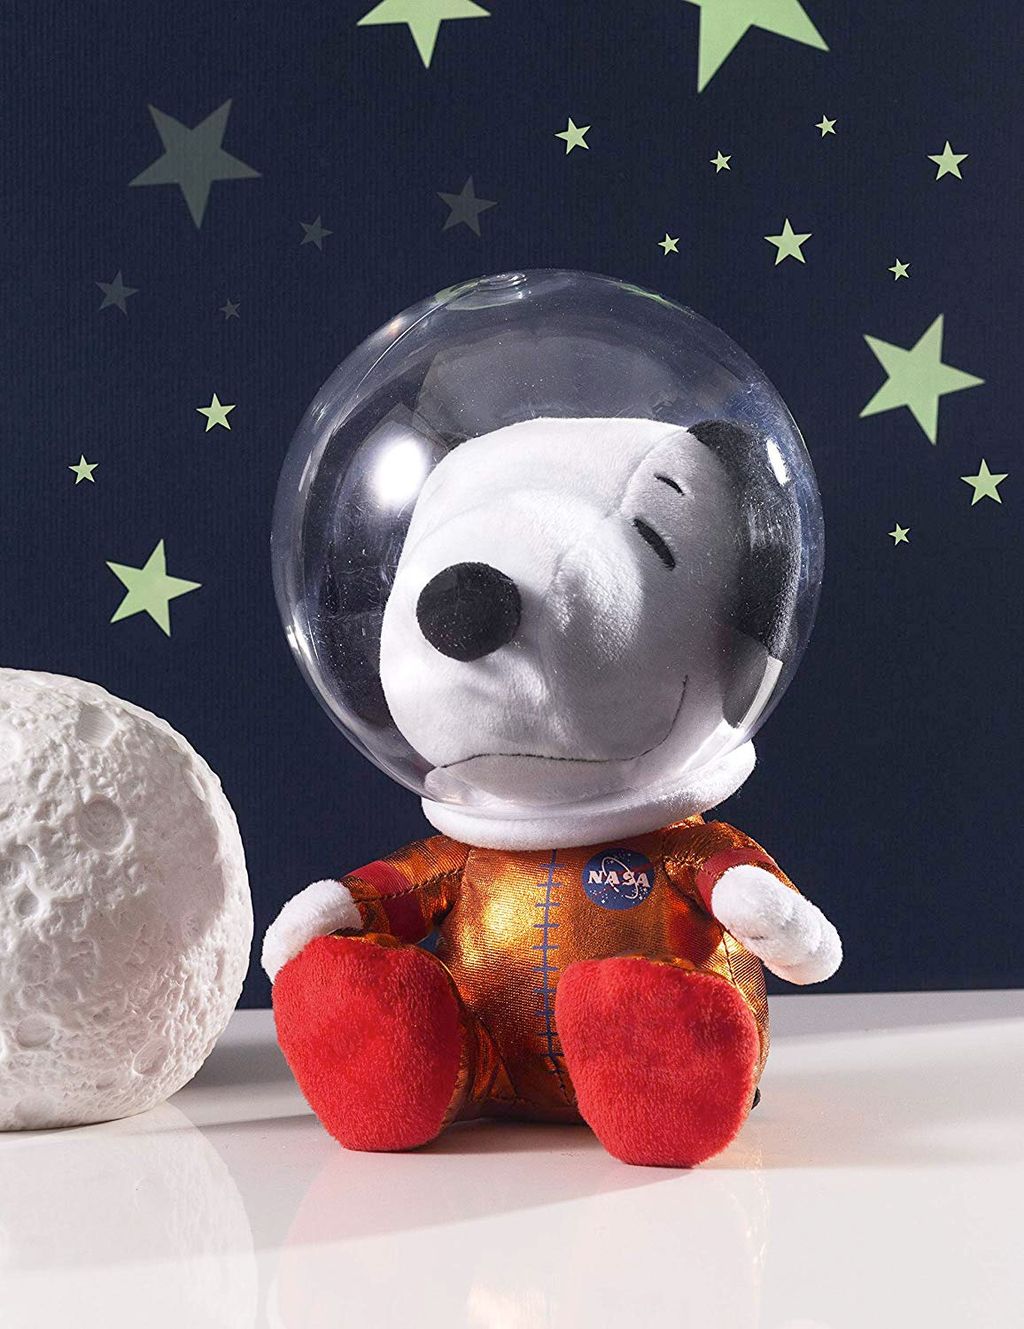 Hallmark's Astronaut Snoopy Is 50% Off on Amazon (Timex Watches on Sale, Too!